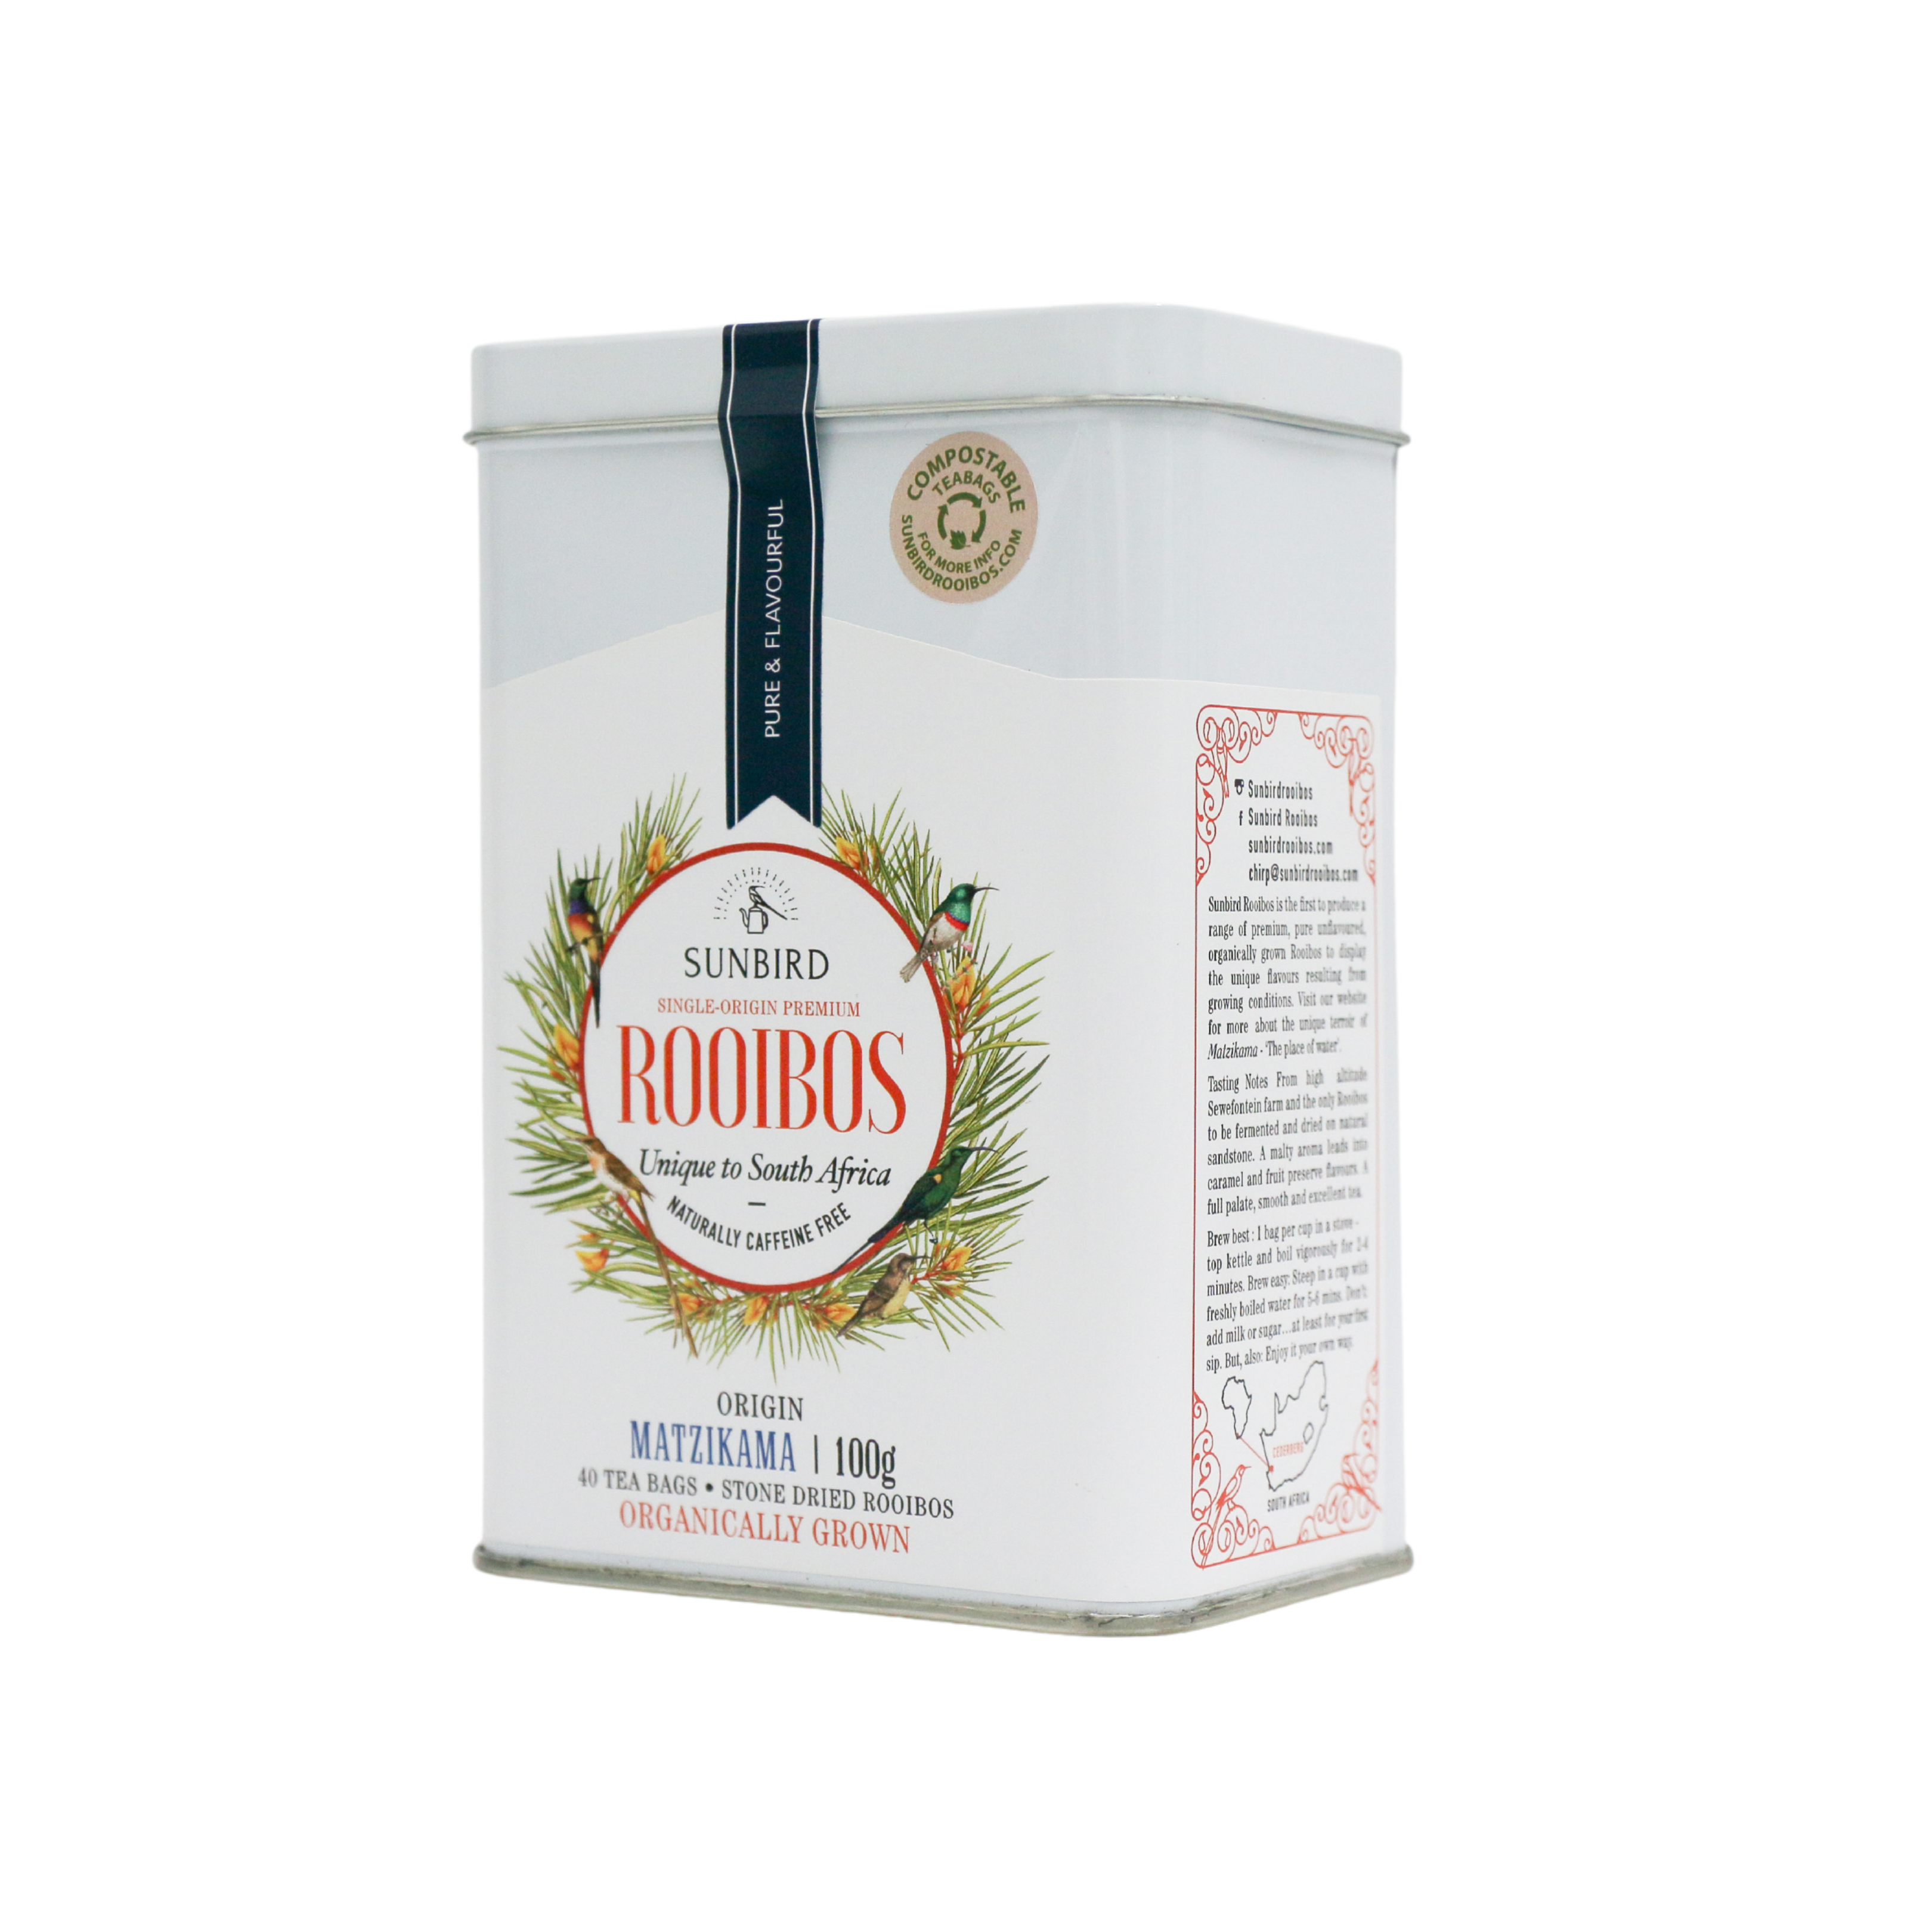 MATZIKAMA • Regular-Cut Rooibos in 40 Compostable Tea Bags • 100g